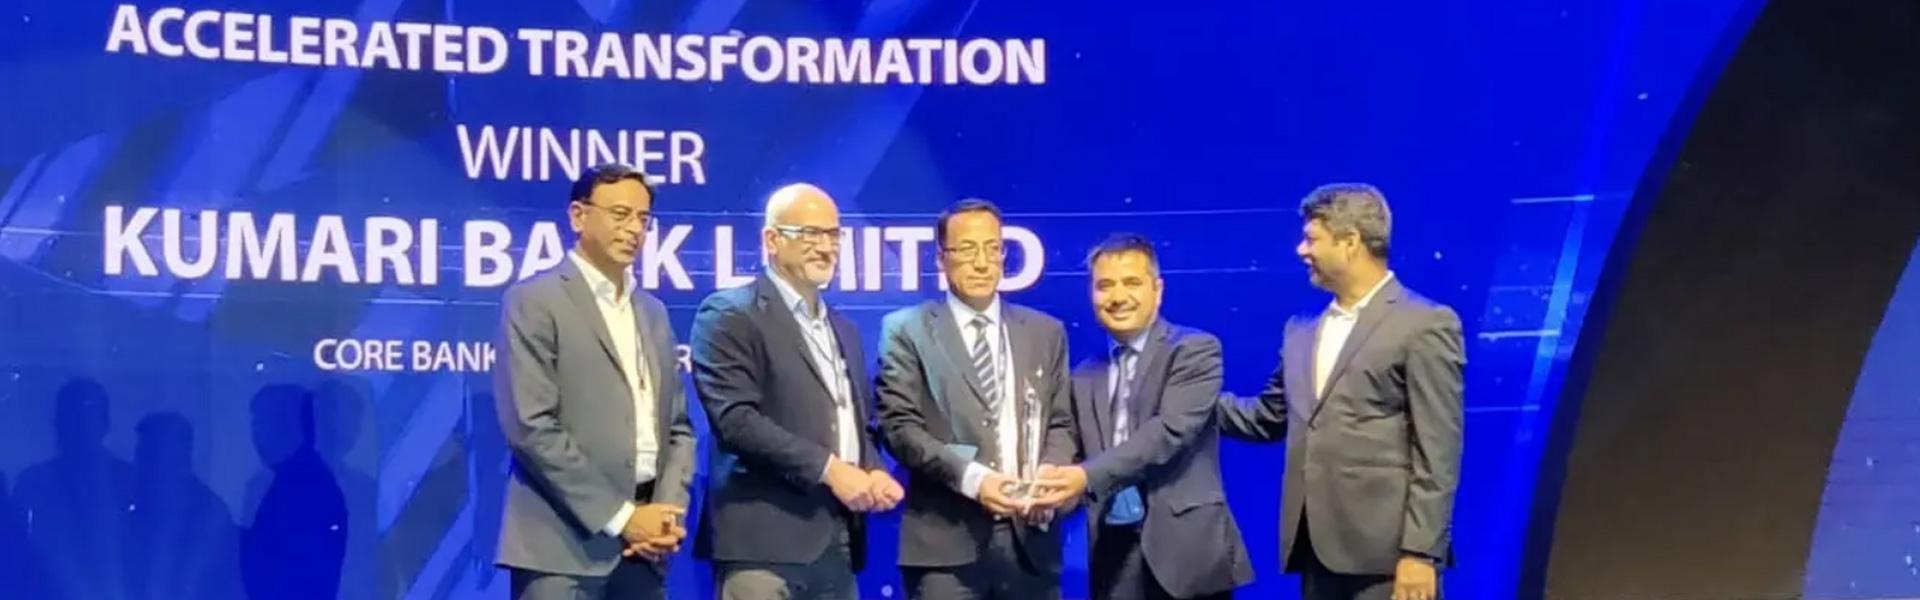 kumari-bank-wins-accelerated-transformation-award-2019